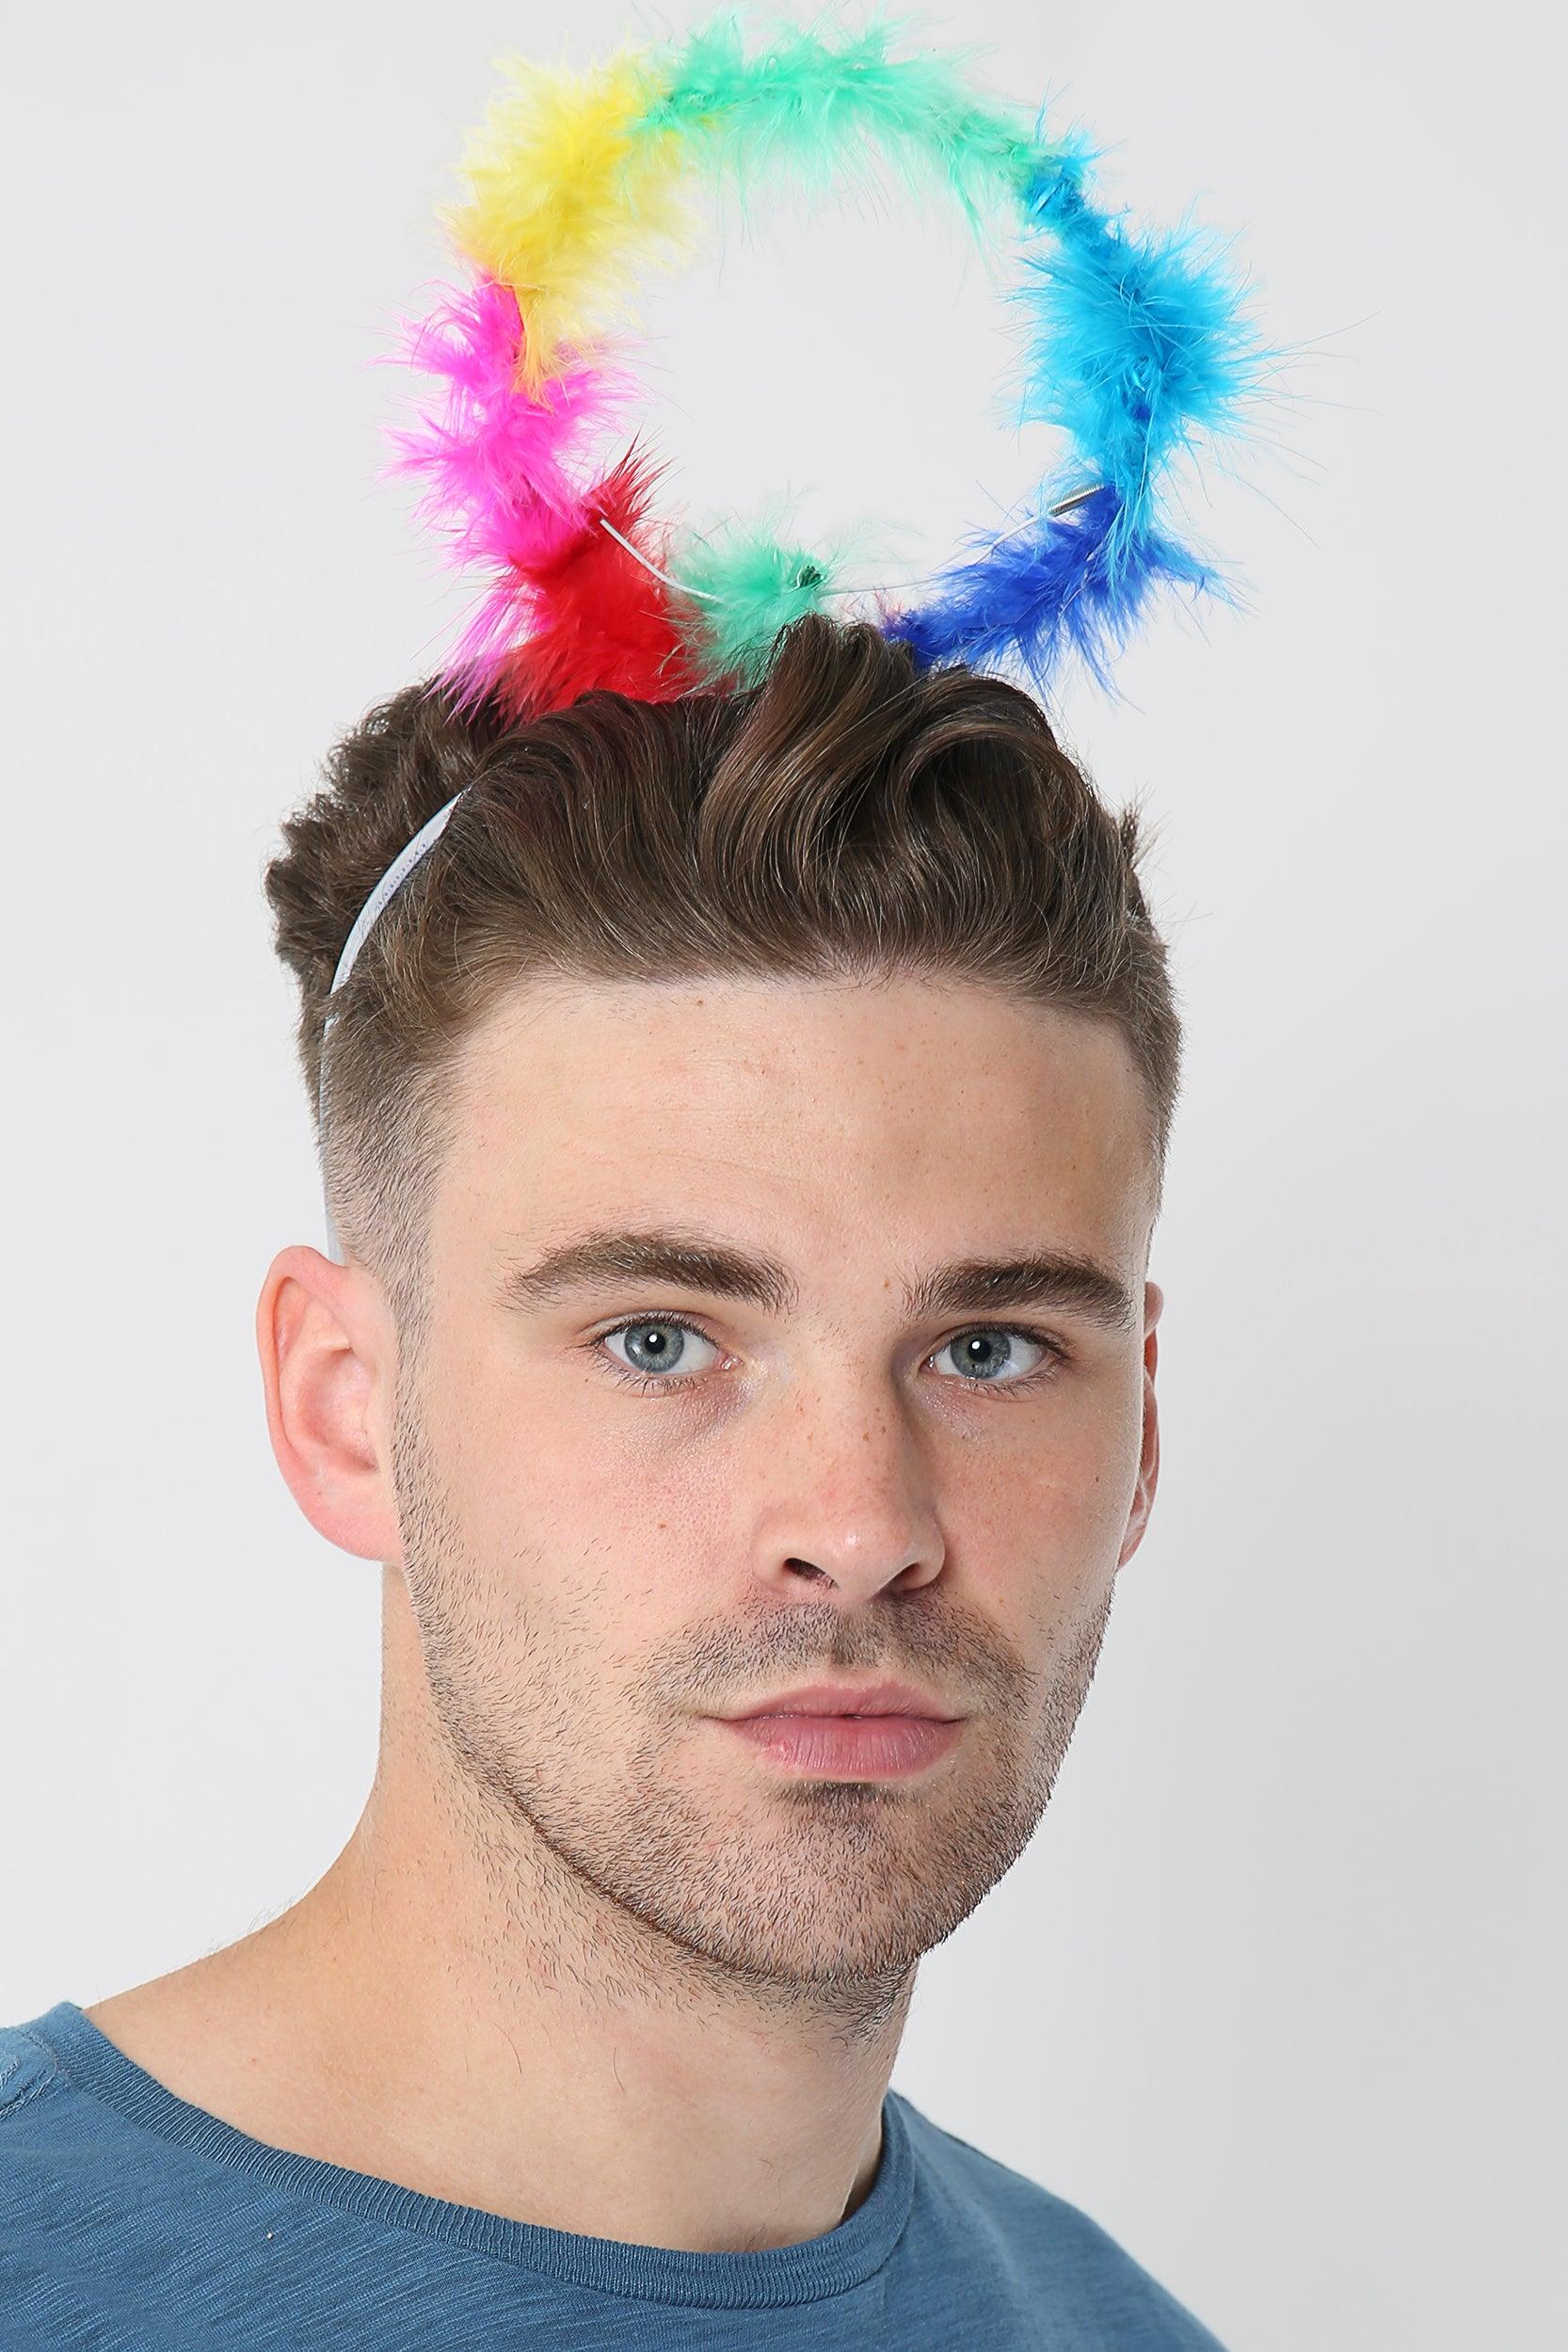 Rainbow Gay Pride Angel Halo Hairband LGBTQ Gay Pride Parade Fancy Dress Party Headwear - Labreeze